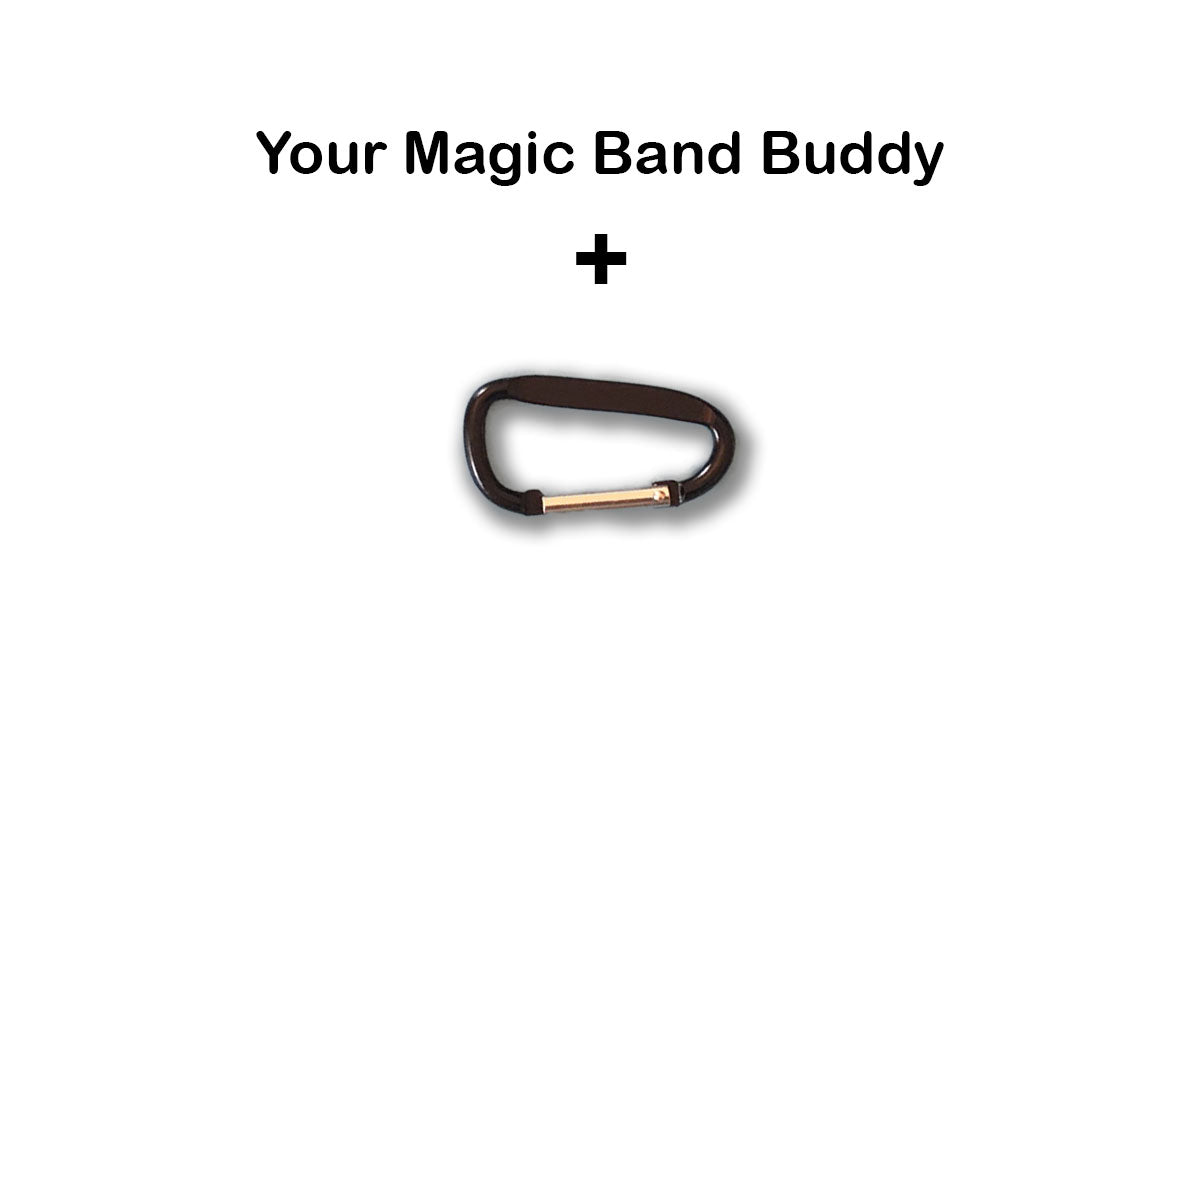 Burlap Sack Bogeyman Magic Band Buddy